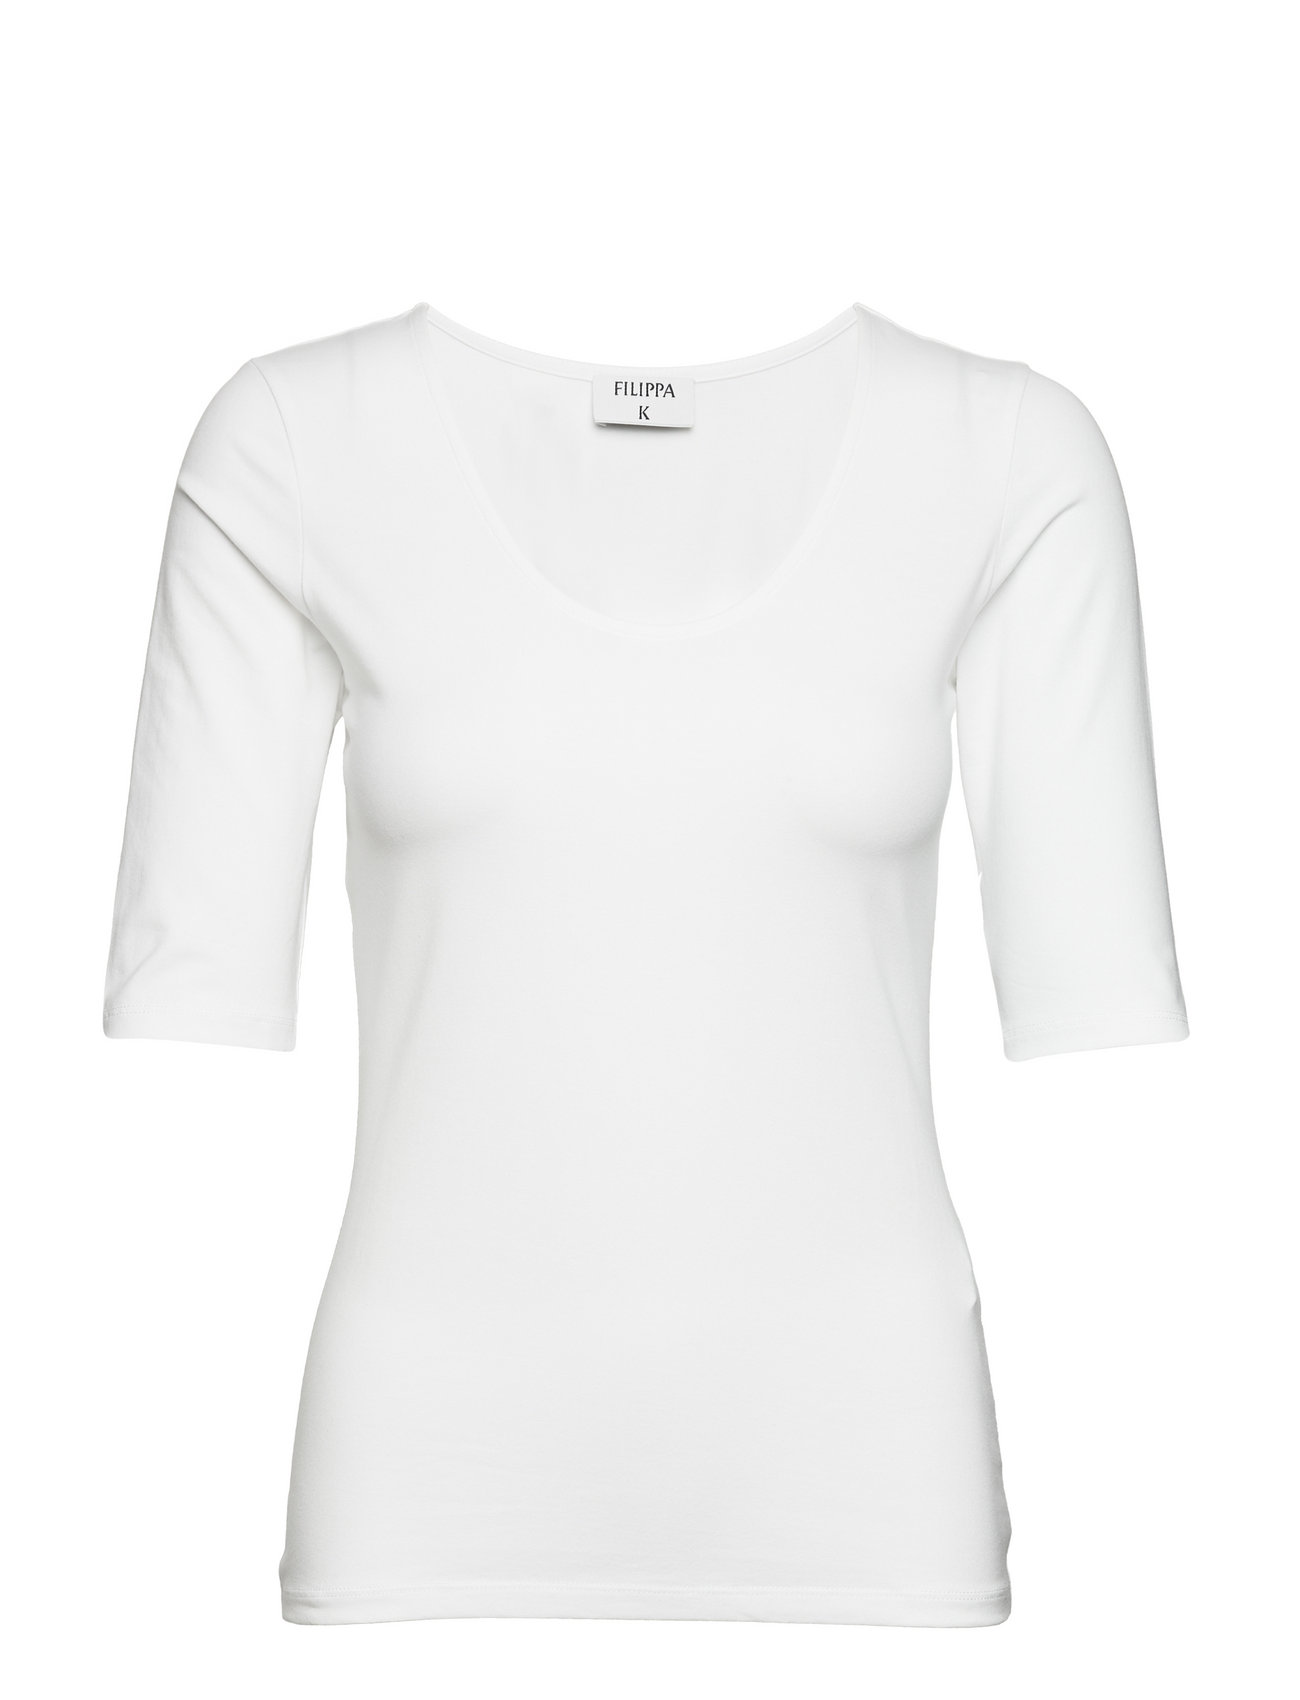 K Cotton Stretch Scoop Neck Top - T-shirts - Boozt.com